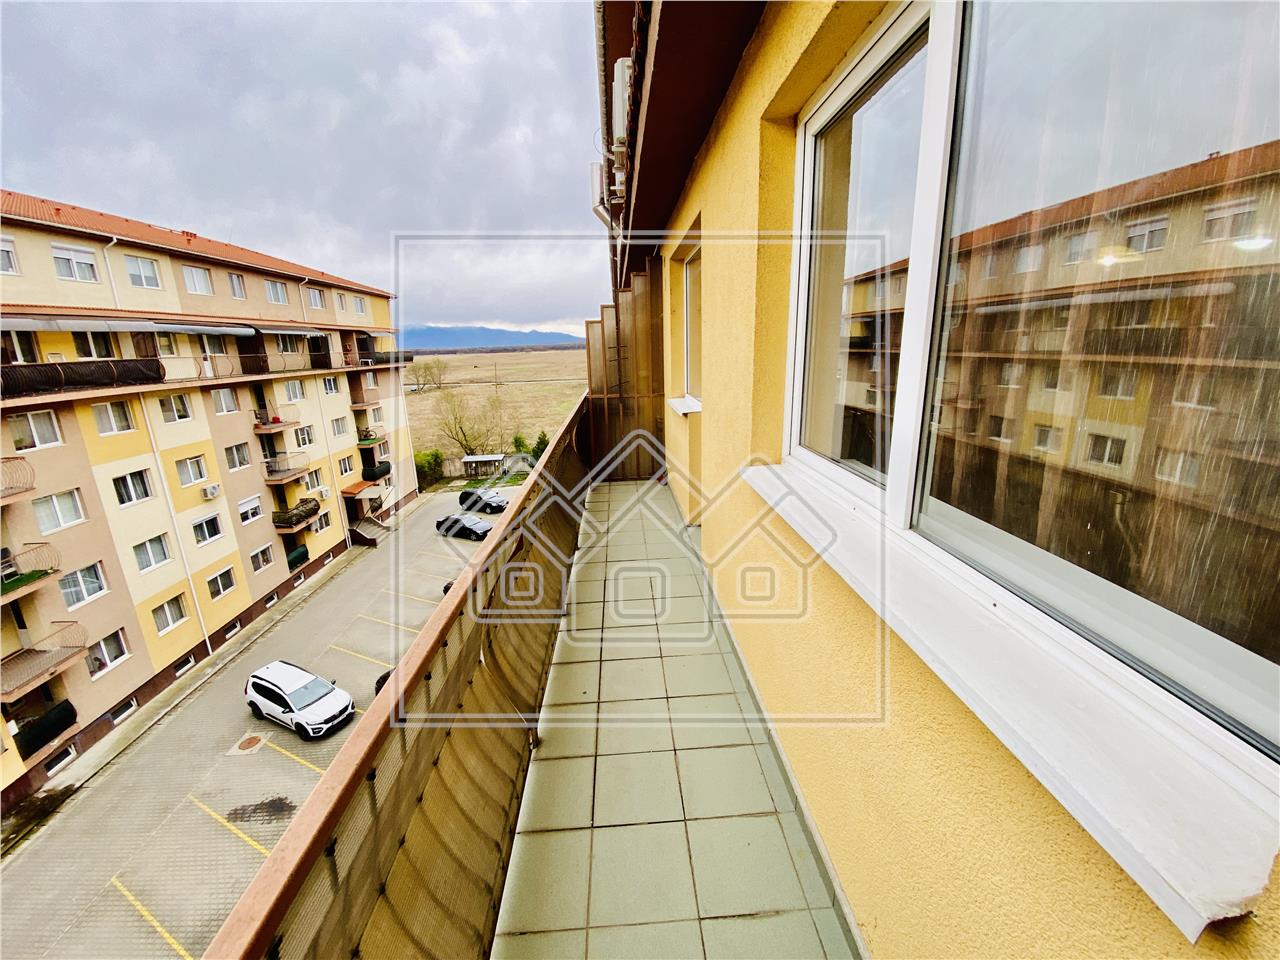 Apartment for sale in Sibiu - 87 square meters - Rahovei area